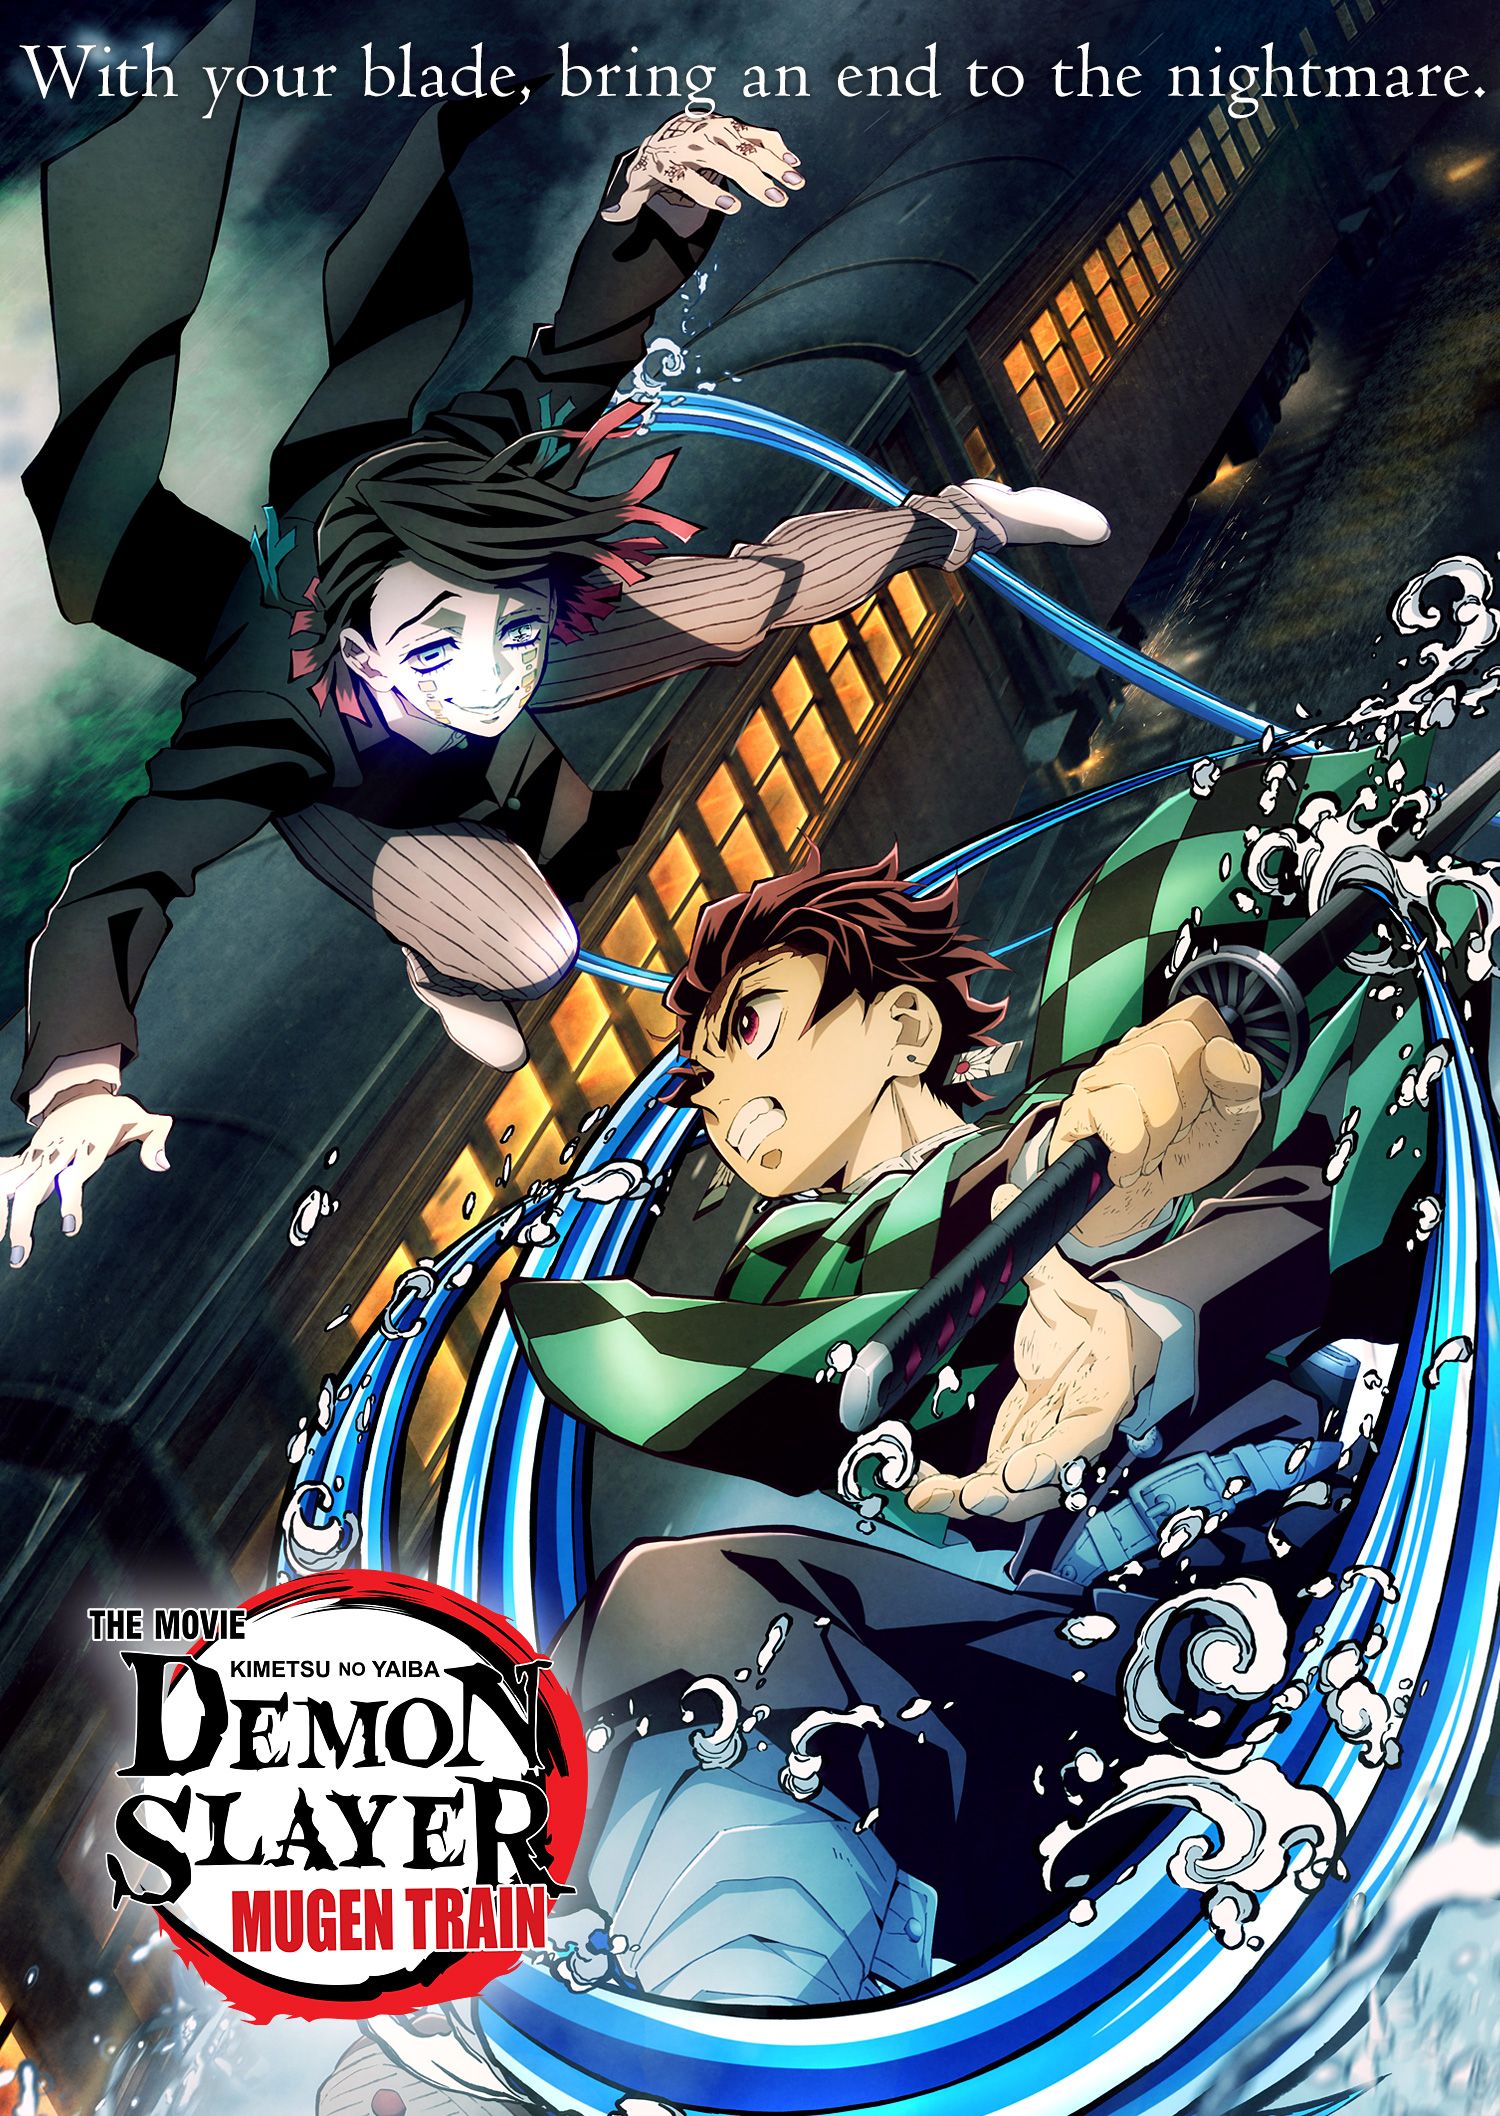 HD Demon Slayer Poster Artwork Jafananci Anime Nigeria